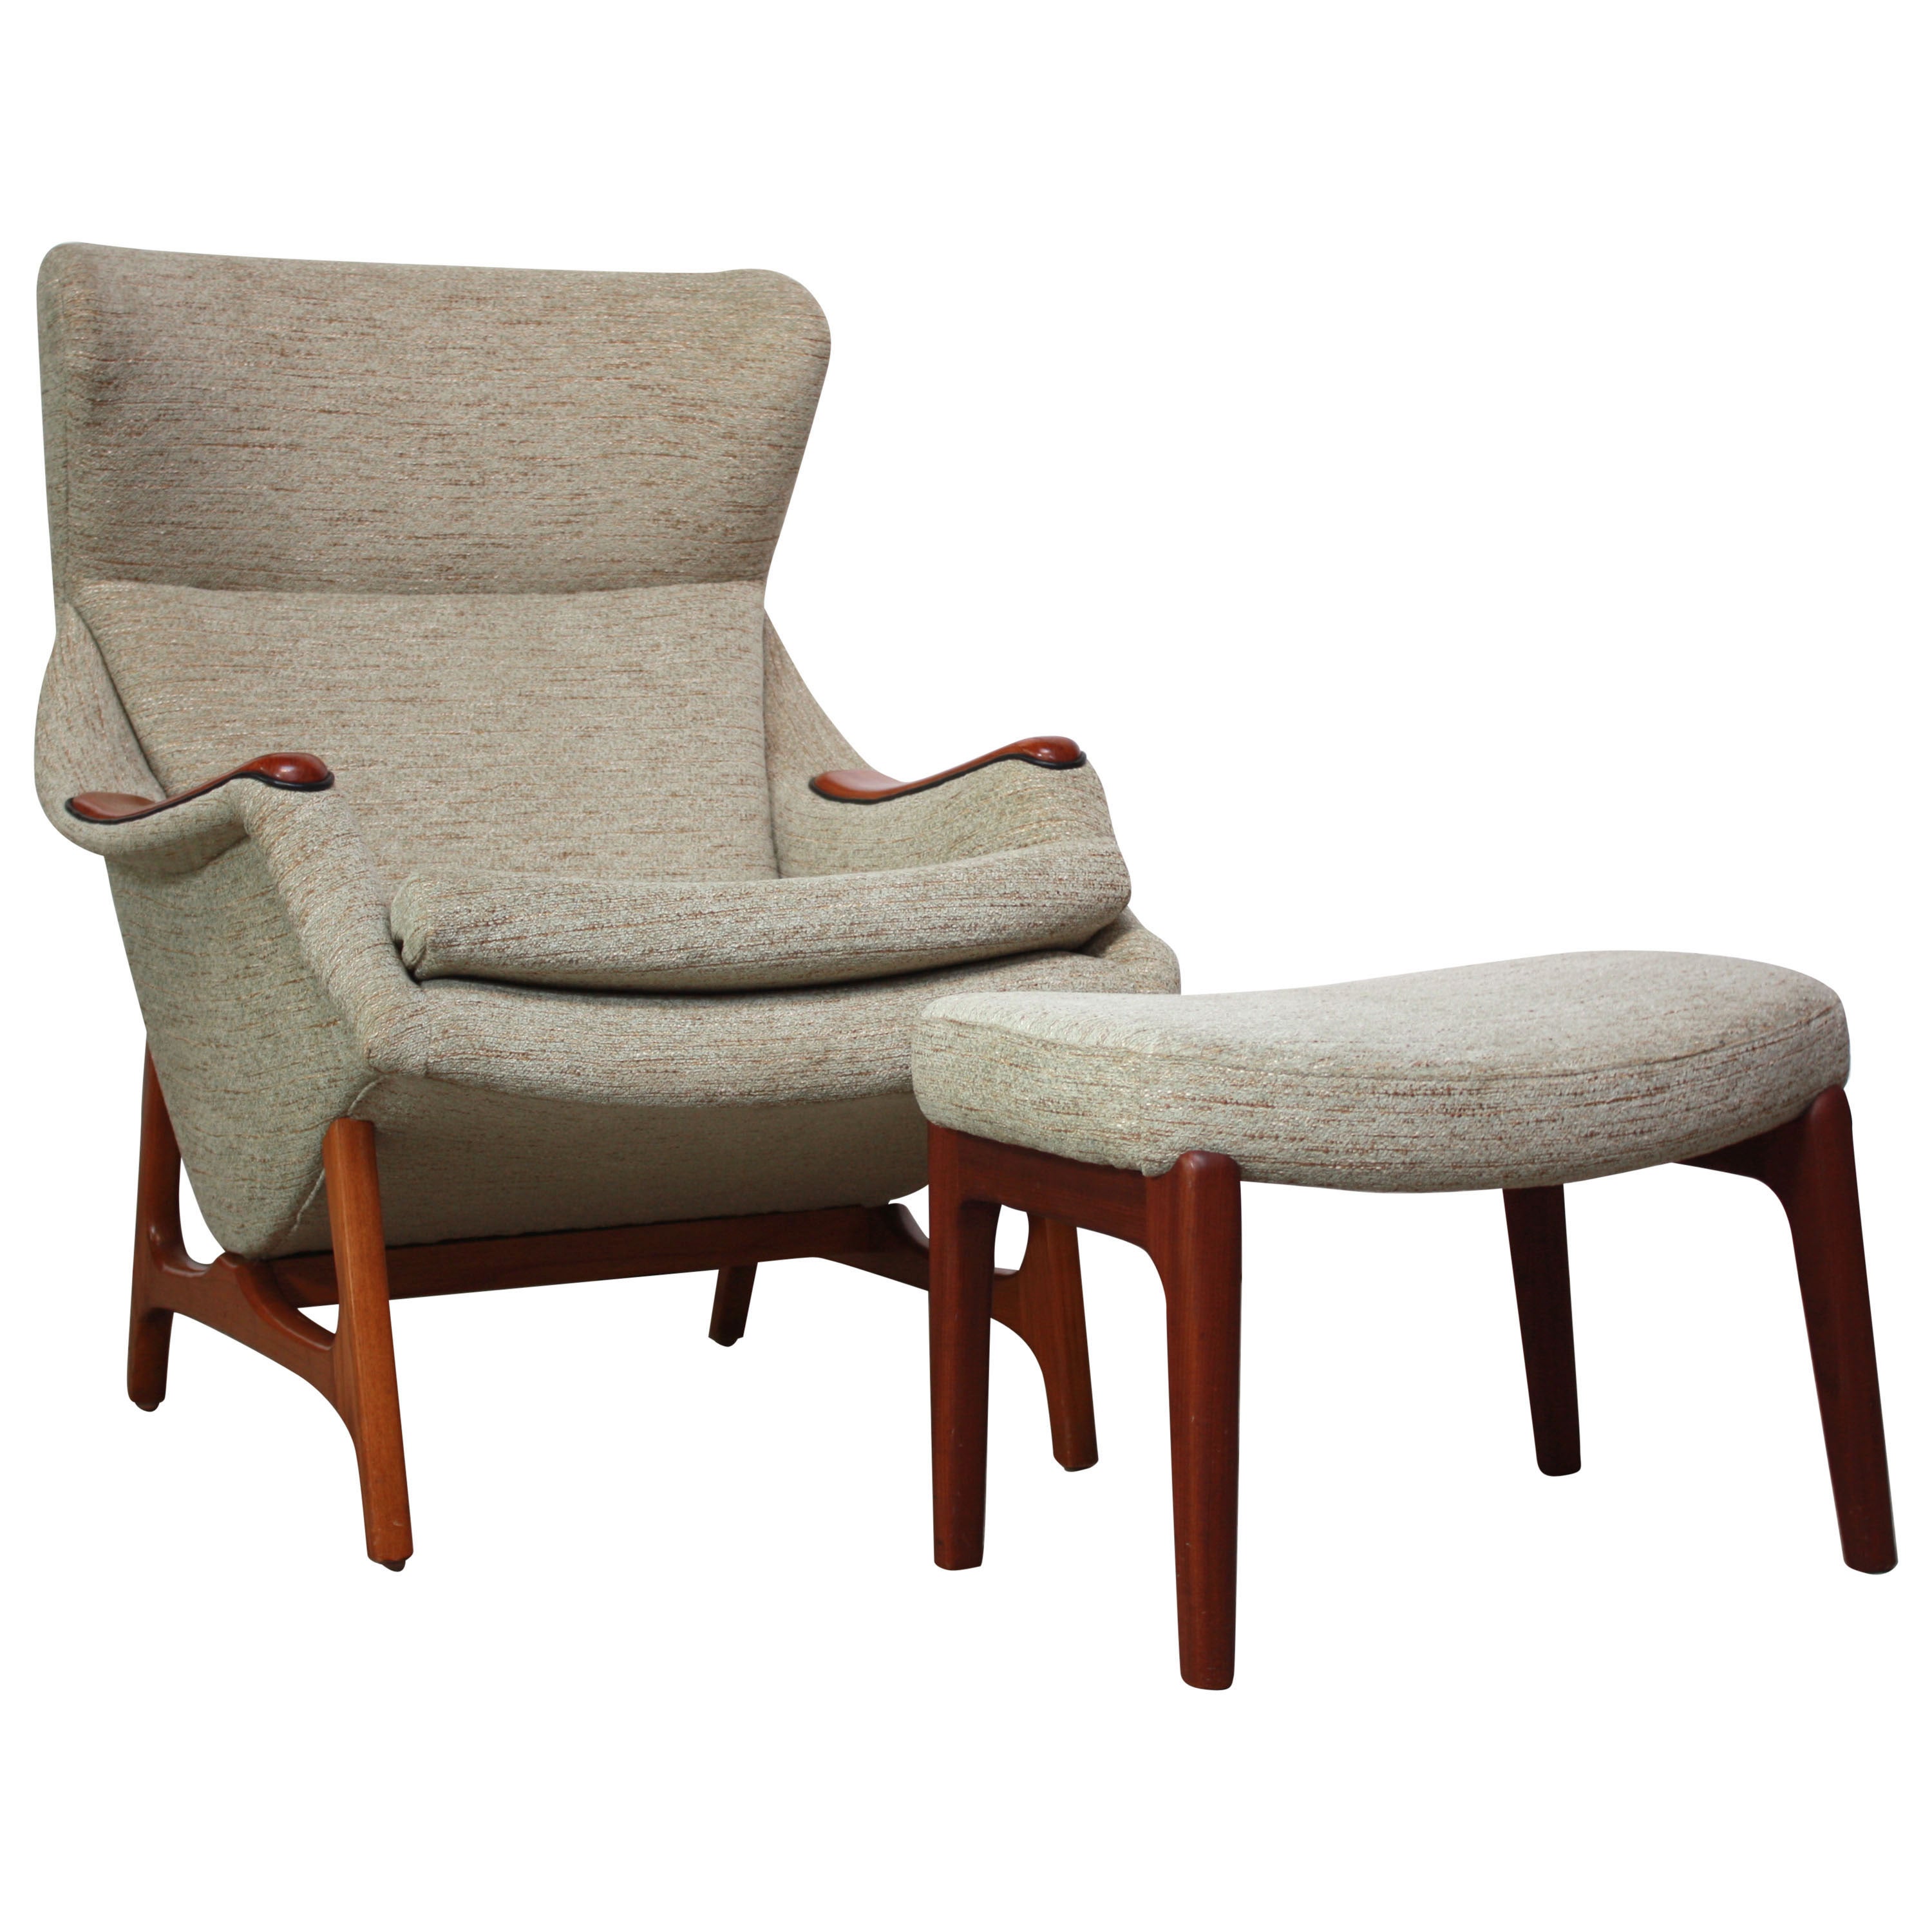 B.J. Hansen Norwegian Lounge Chair and Ottoman